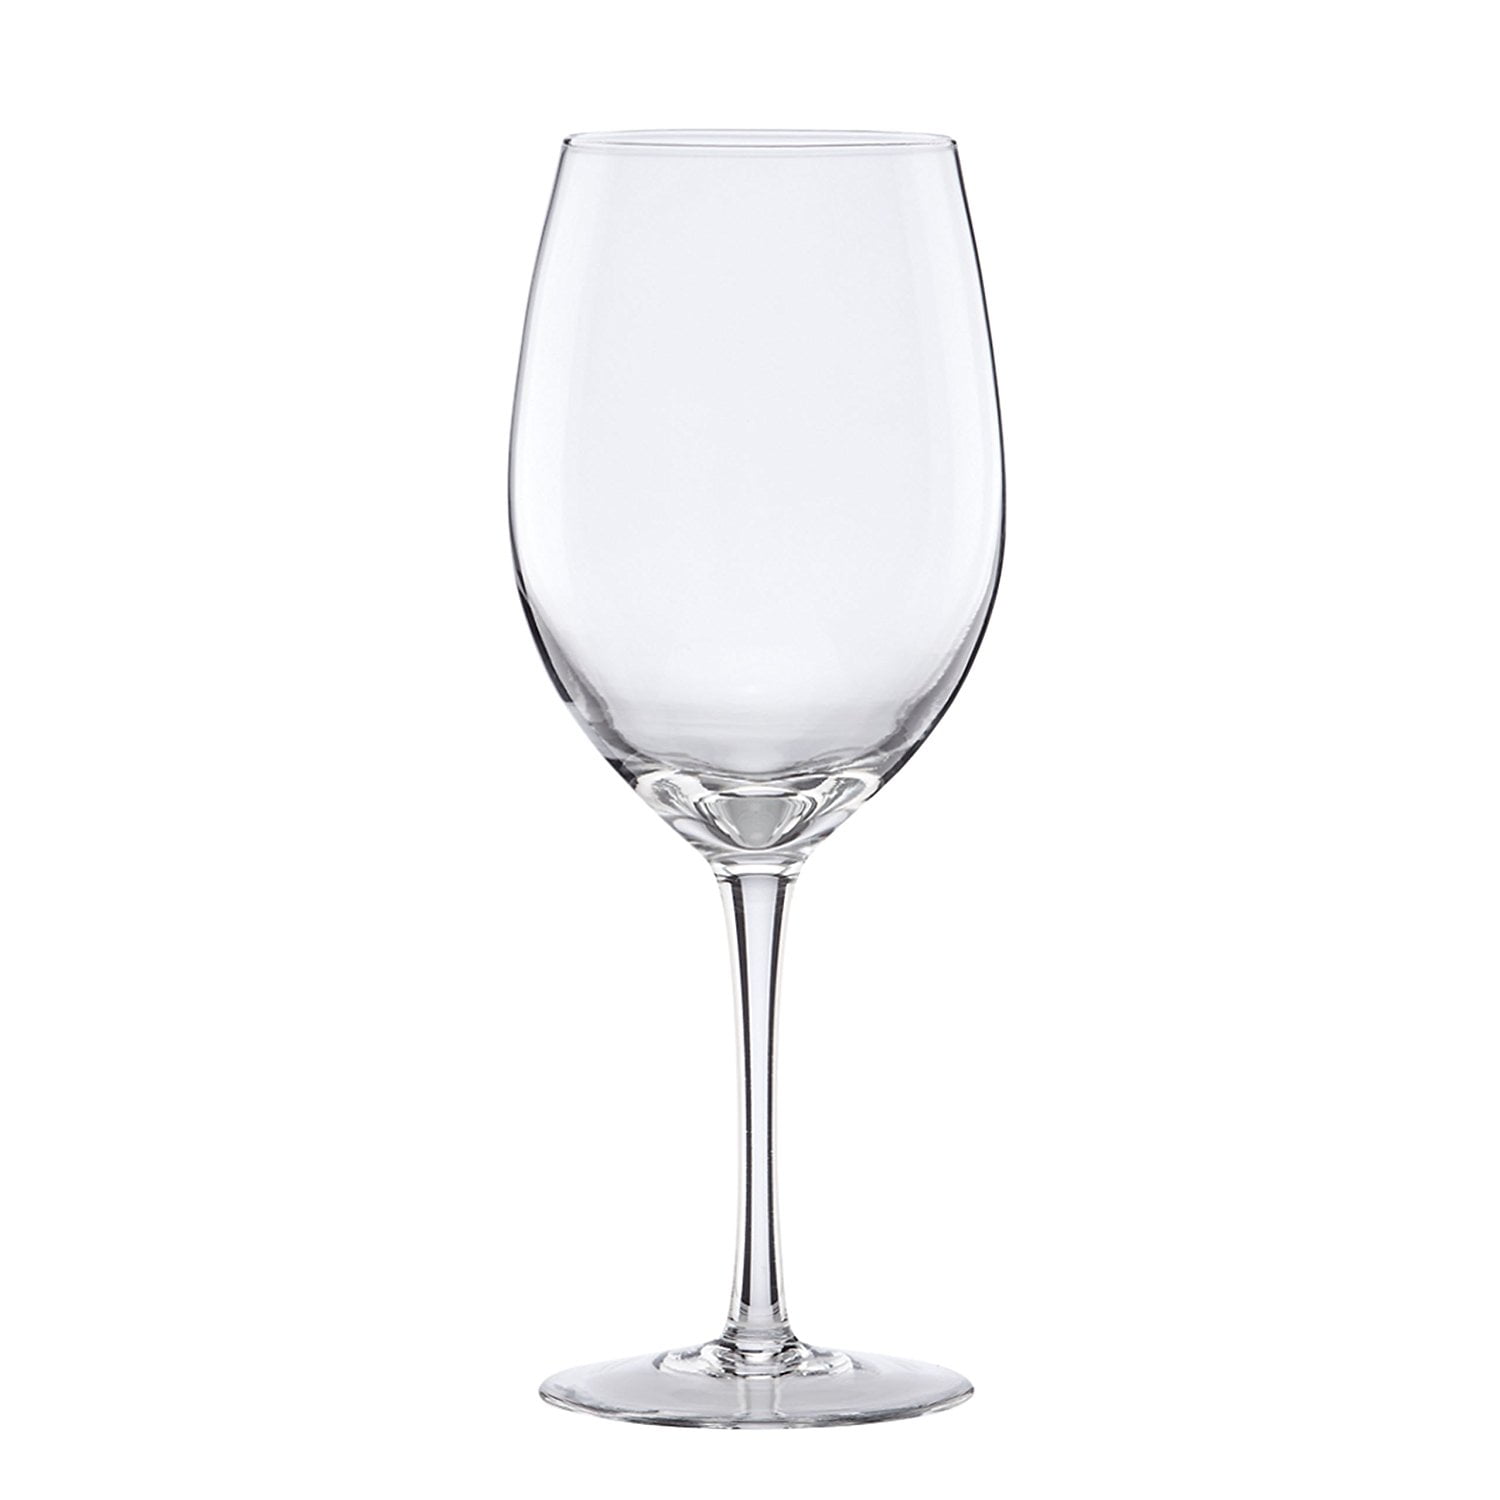 OSQI Metallic Gold Color Acrylic Wine Glasses Set of 4 (12oz), Premium  Quality Unbreakable Stemmed Acrylic Wine Glasses for All Purpose Red or  White Wine